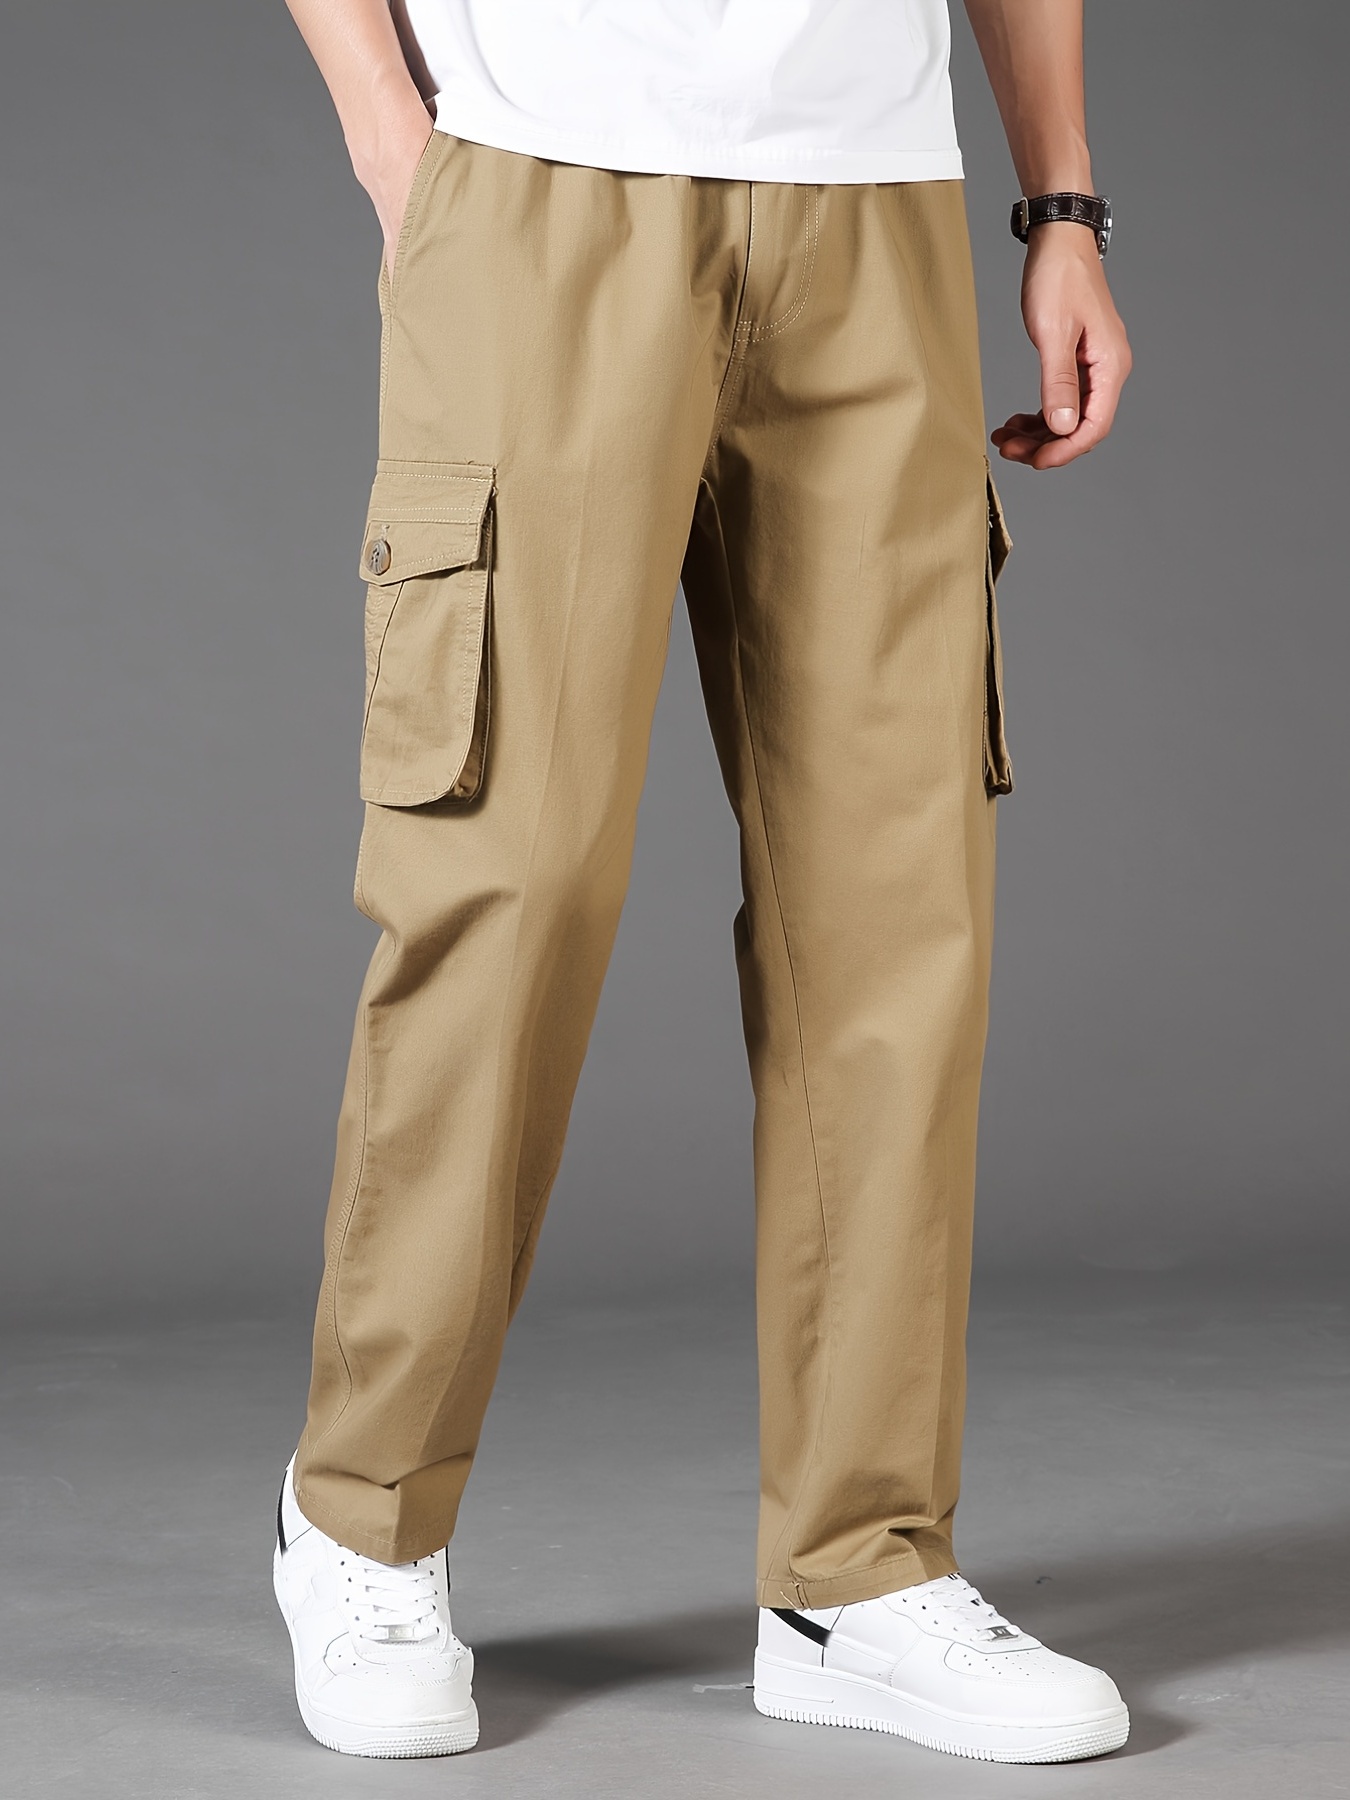 Pantalones cargo de moda para hombre, pantalones de cintura alta